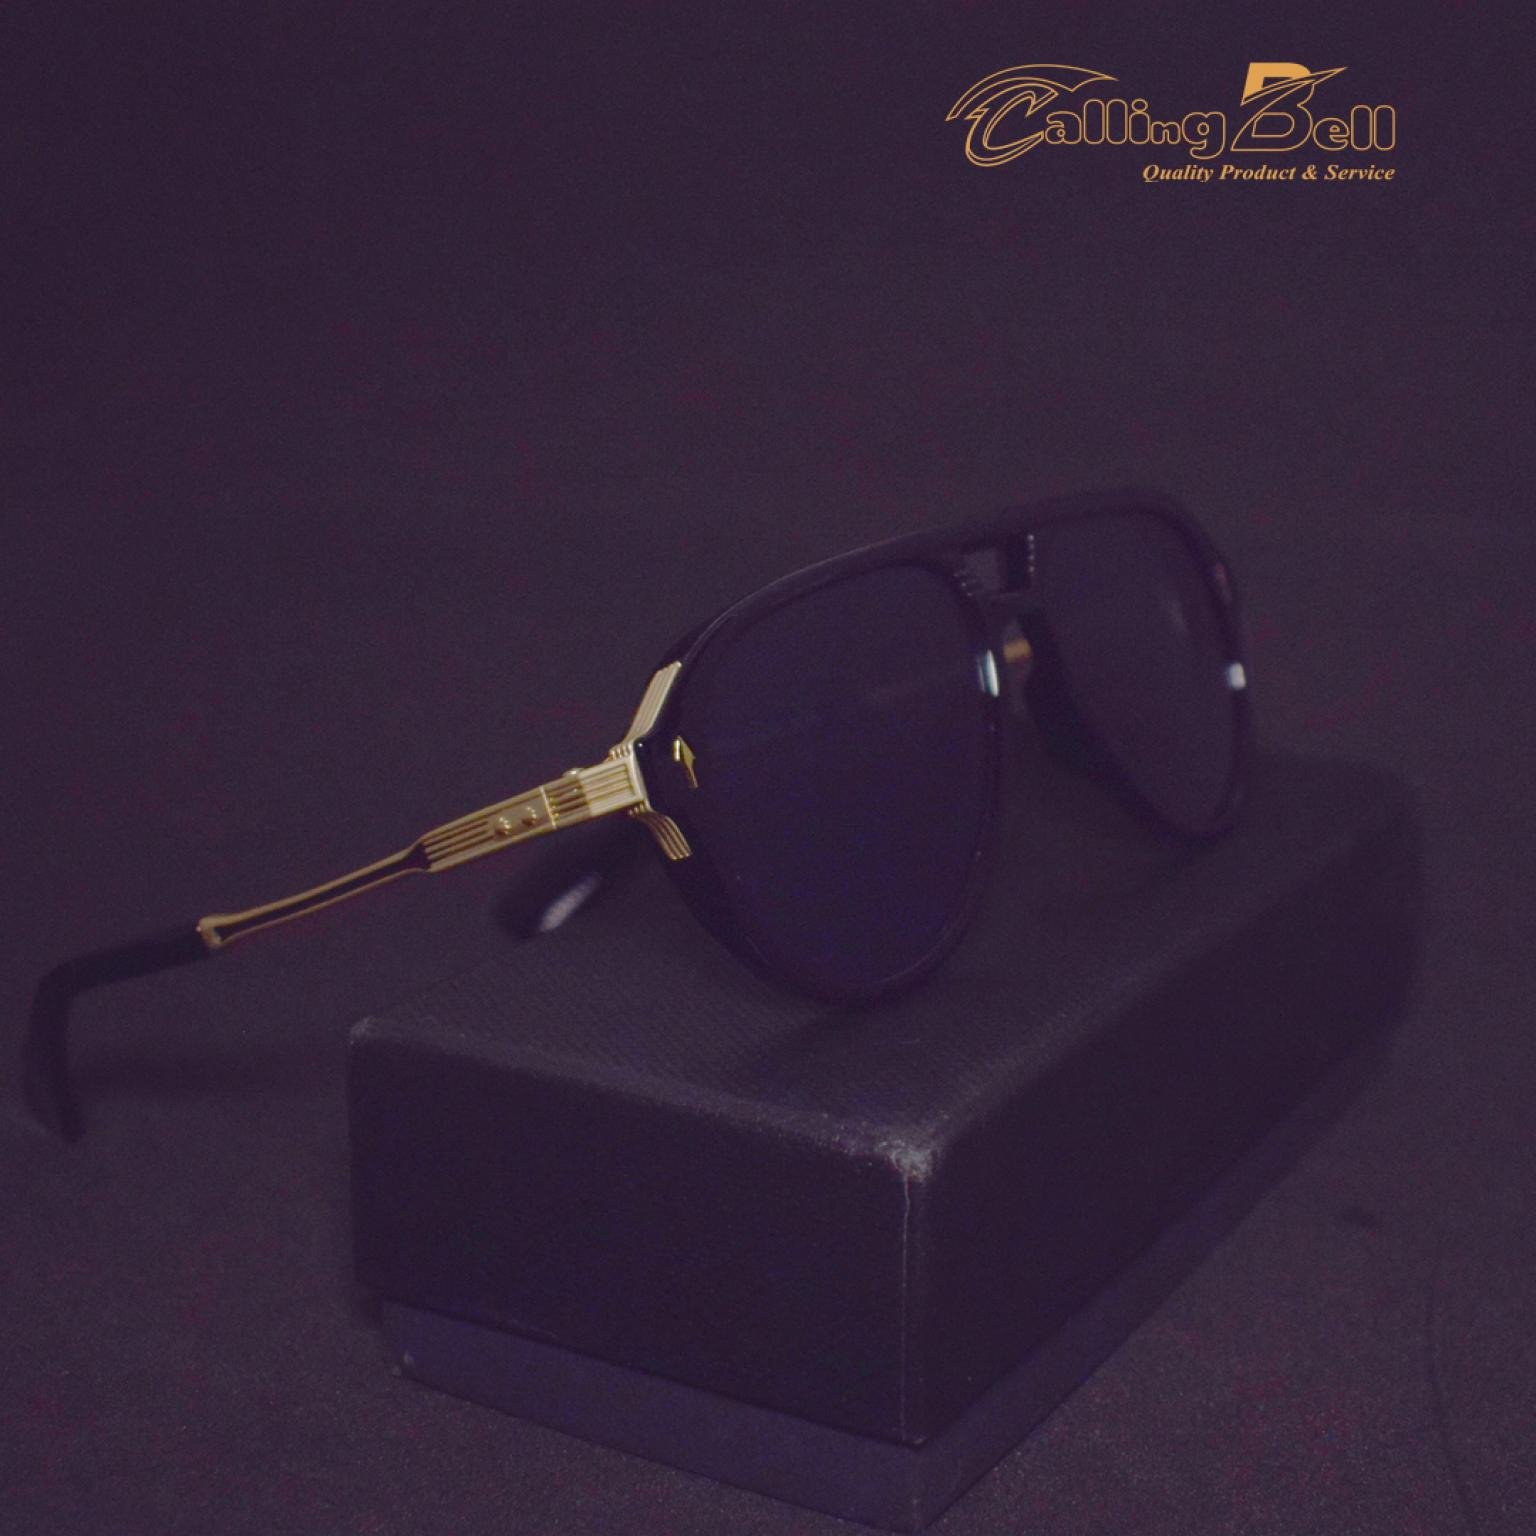 New Polarized Sunglasses Men trendy Mirrored Driving Glasses Black  Rectangle Sunglasses Male Cool Fashion Classic Premium Quality Sunglass -  Callingbell